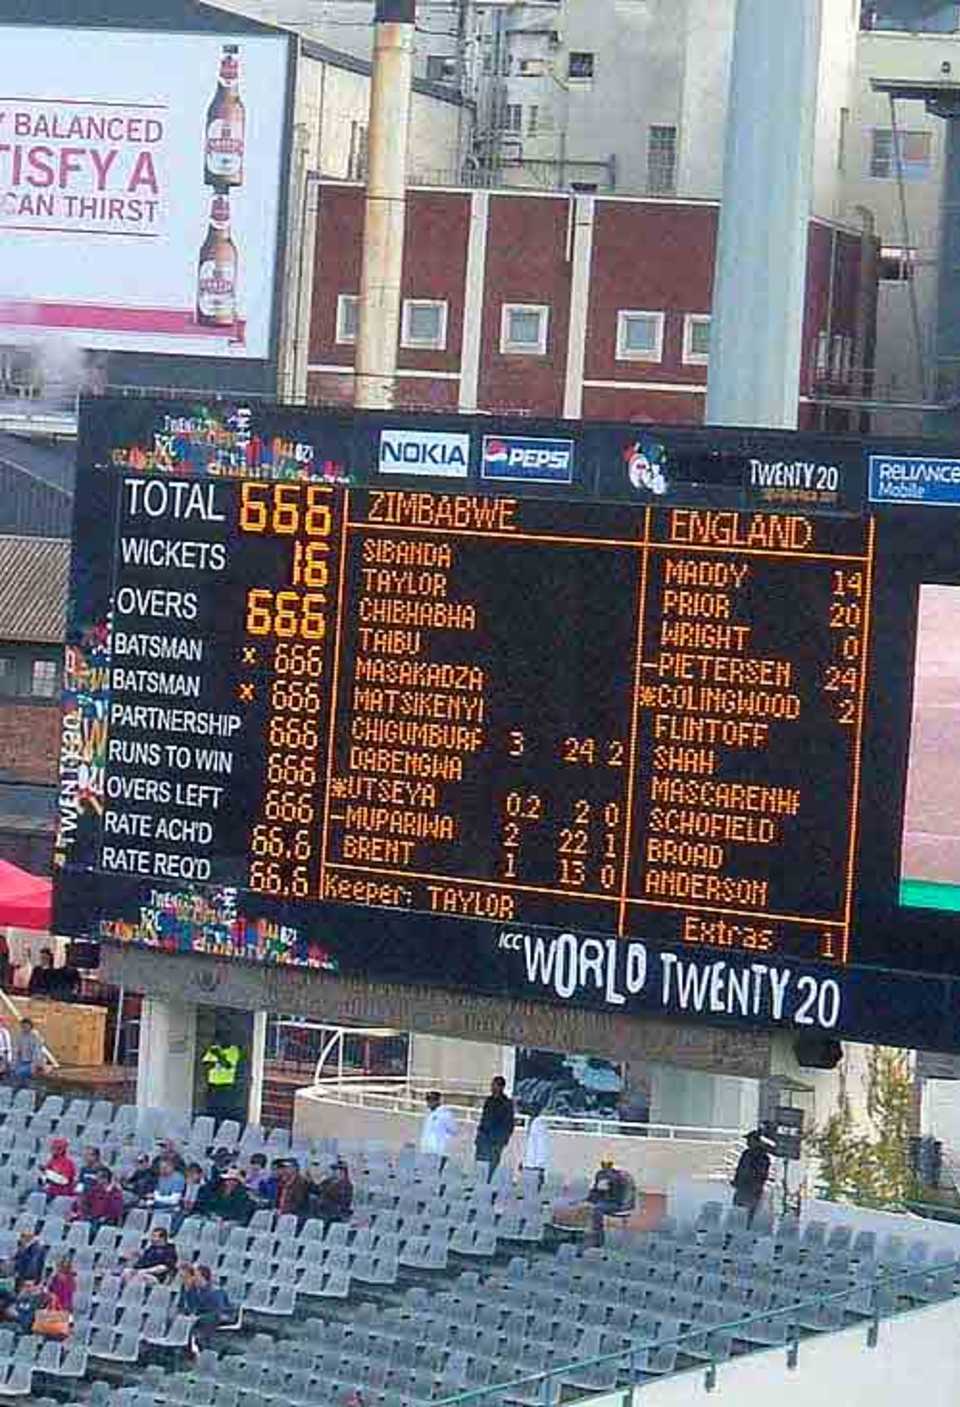 The scoreboard at Newlands had the odd glitch